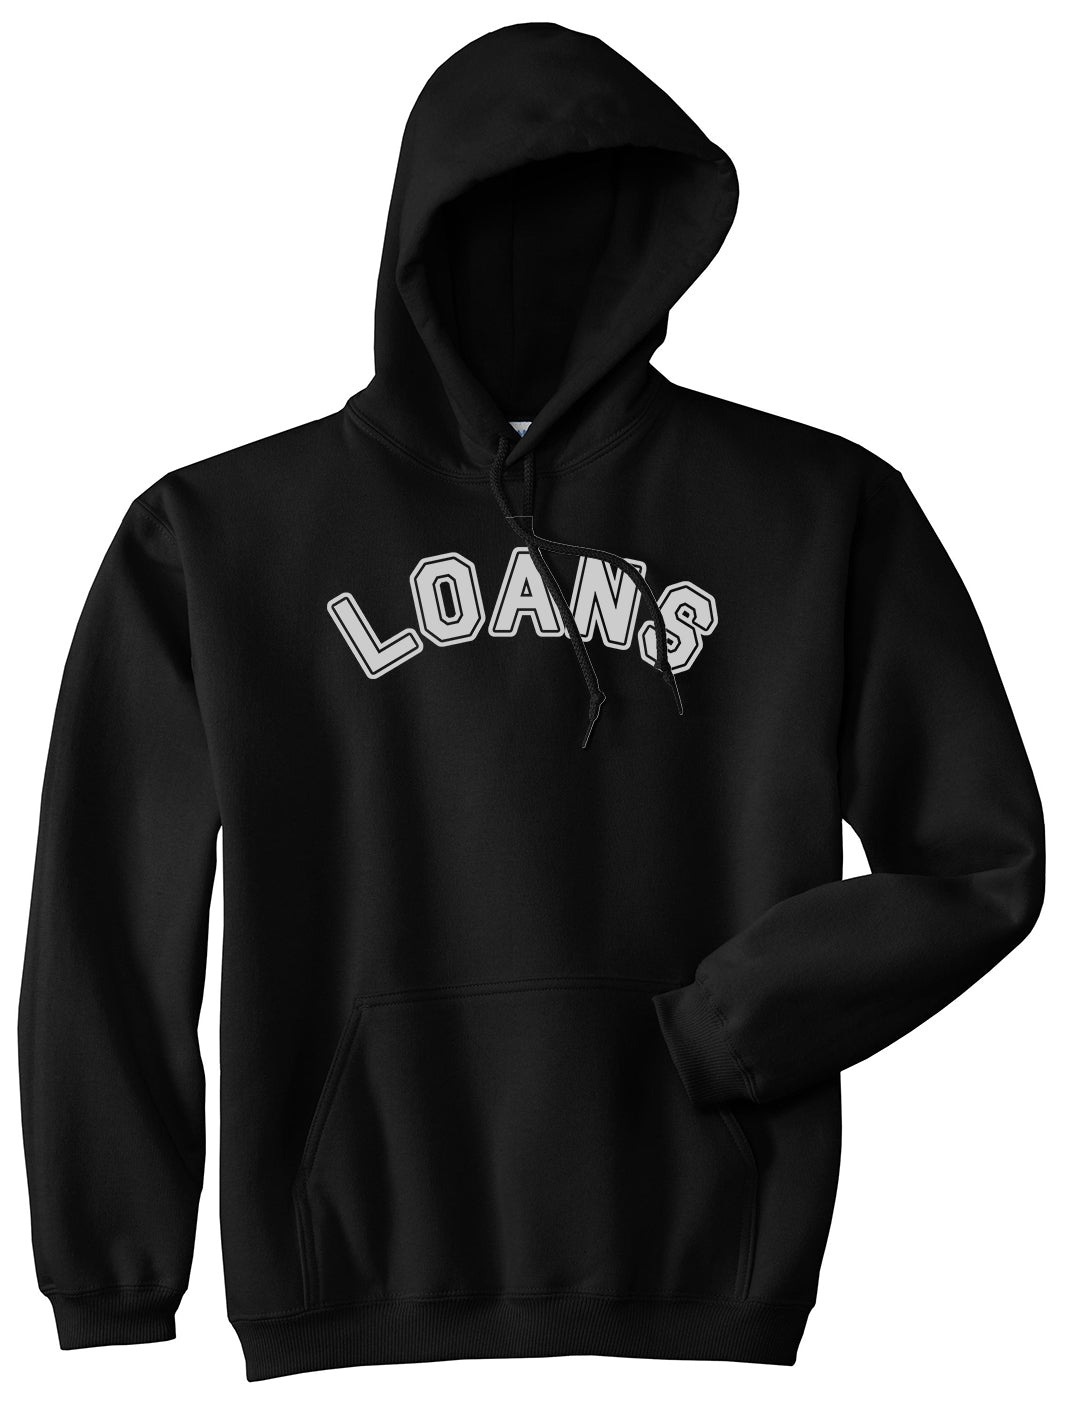 Student Loans College Pullover Hoodie in Black